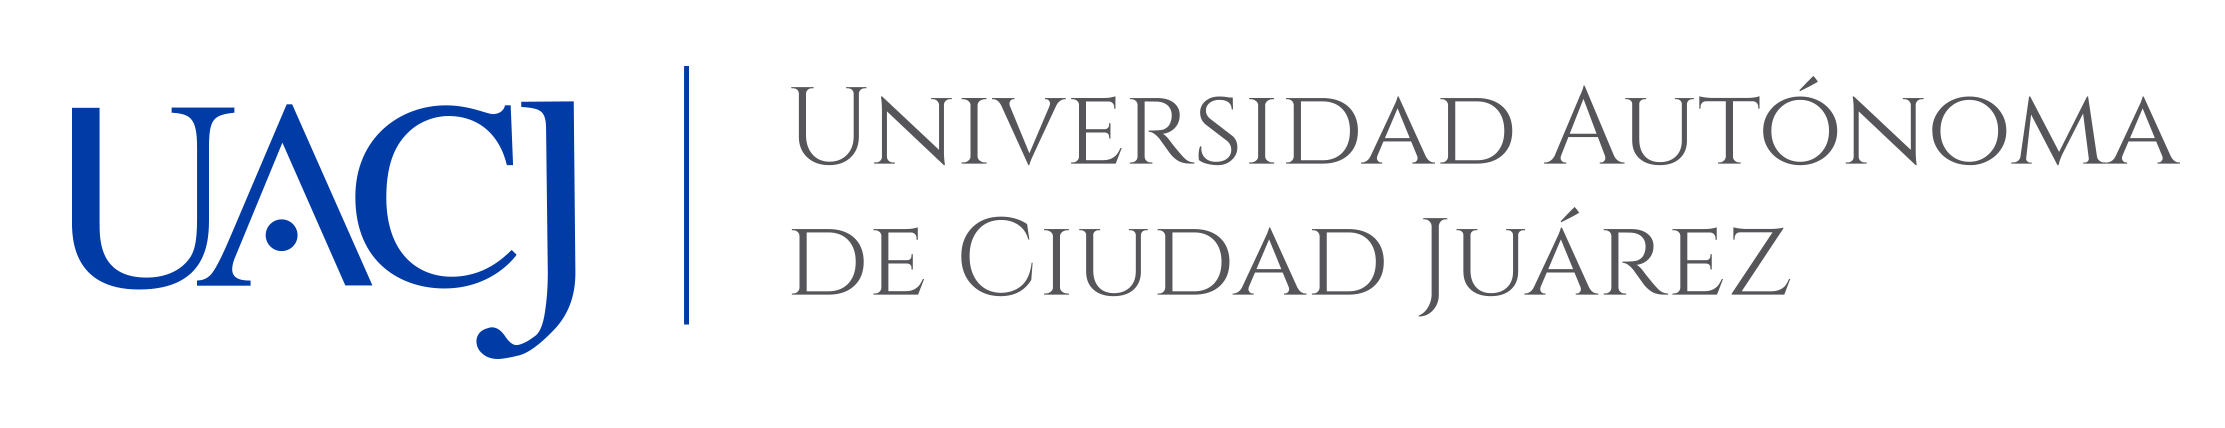 Logotipo UACJ